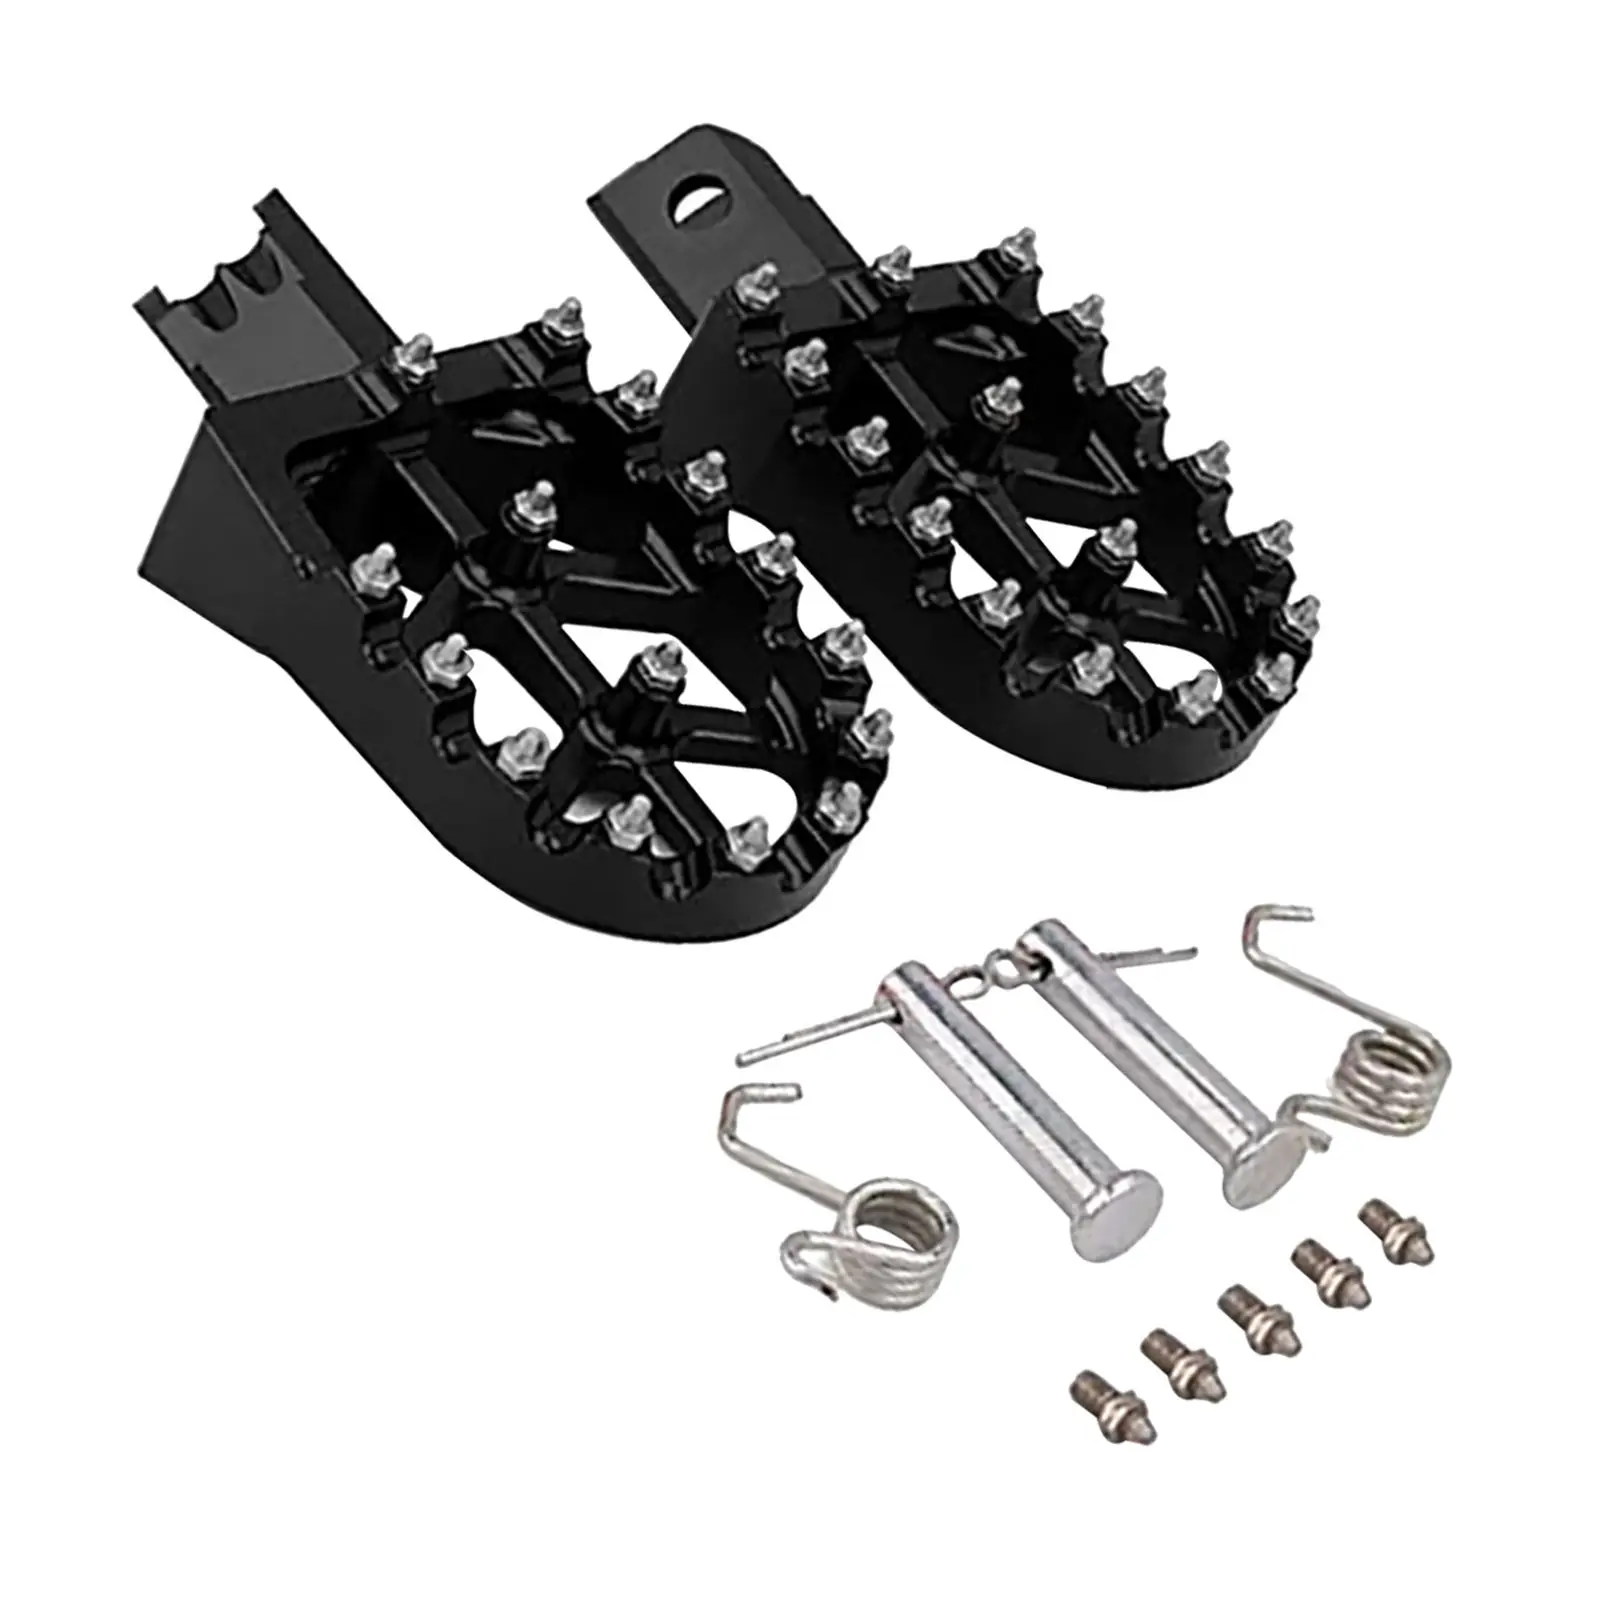 1 Pair Black Footrests Foot Pegs Motorcycle Wide Motocross Black Aluminium Pads Racing Style Design Motorbike Accessories